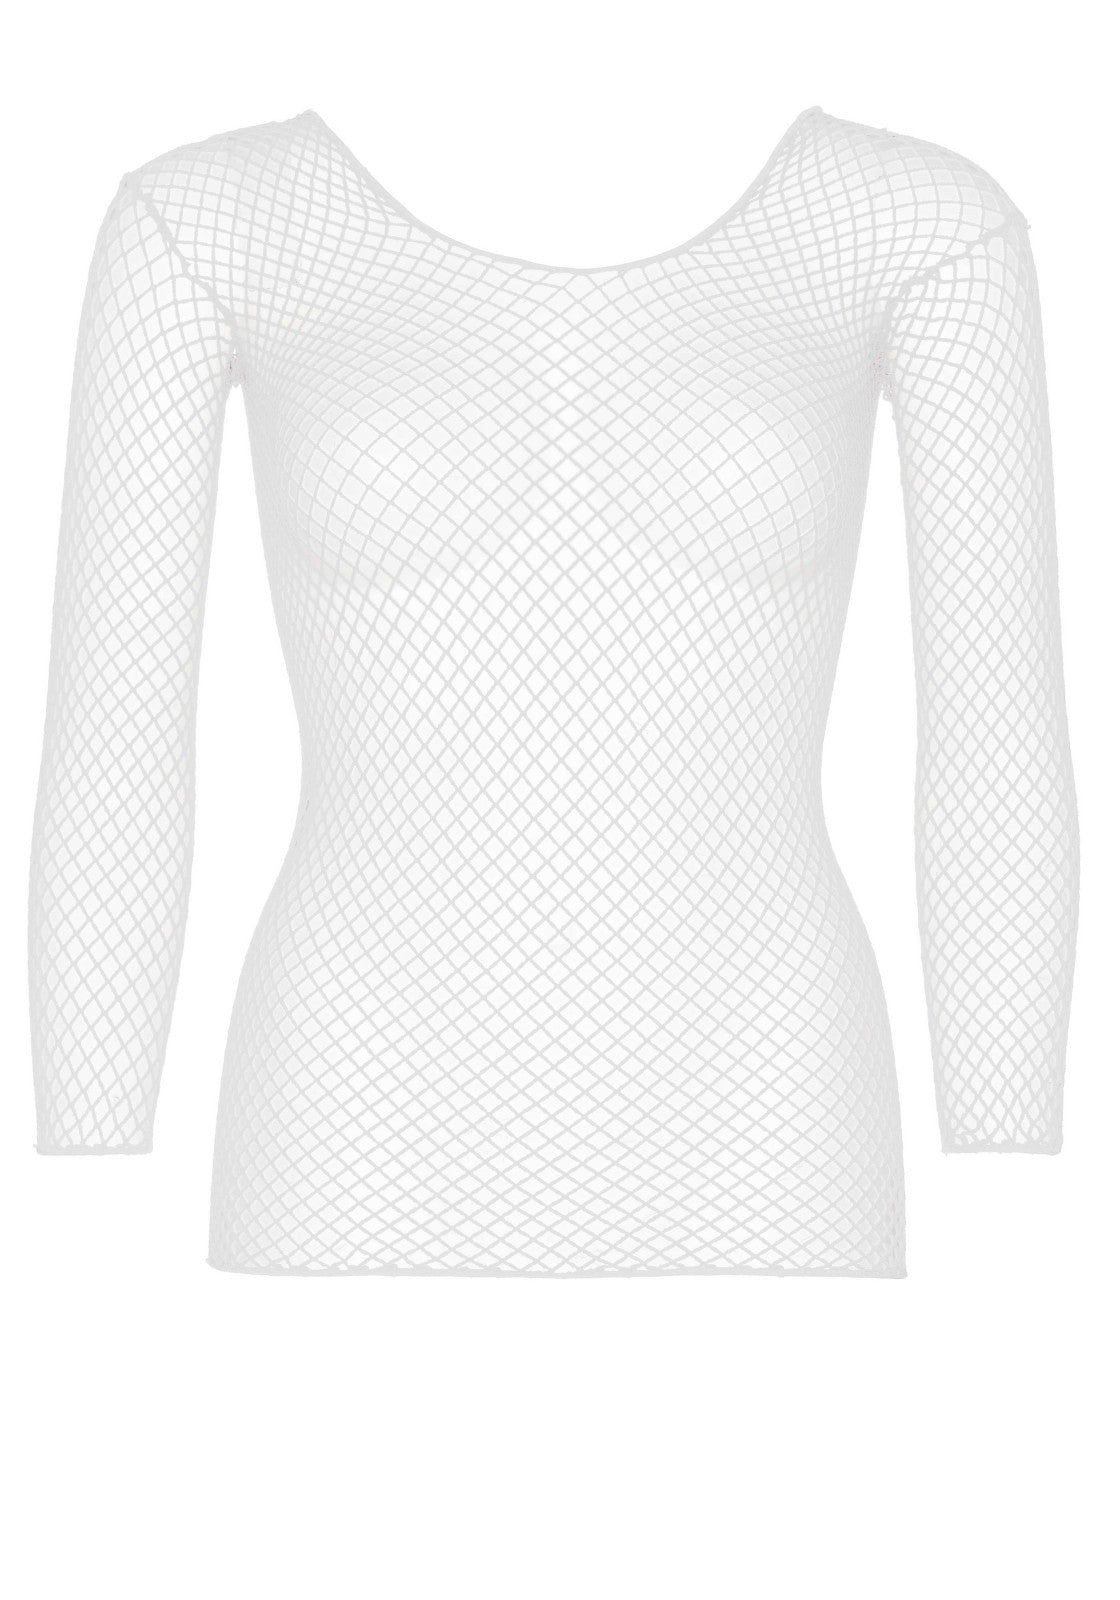 Leg Avenue 8278 Long Sleeves T-Shirts - white fishnet mesh top